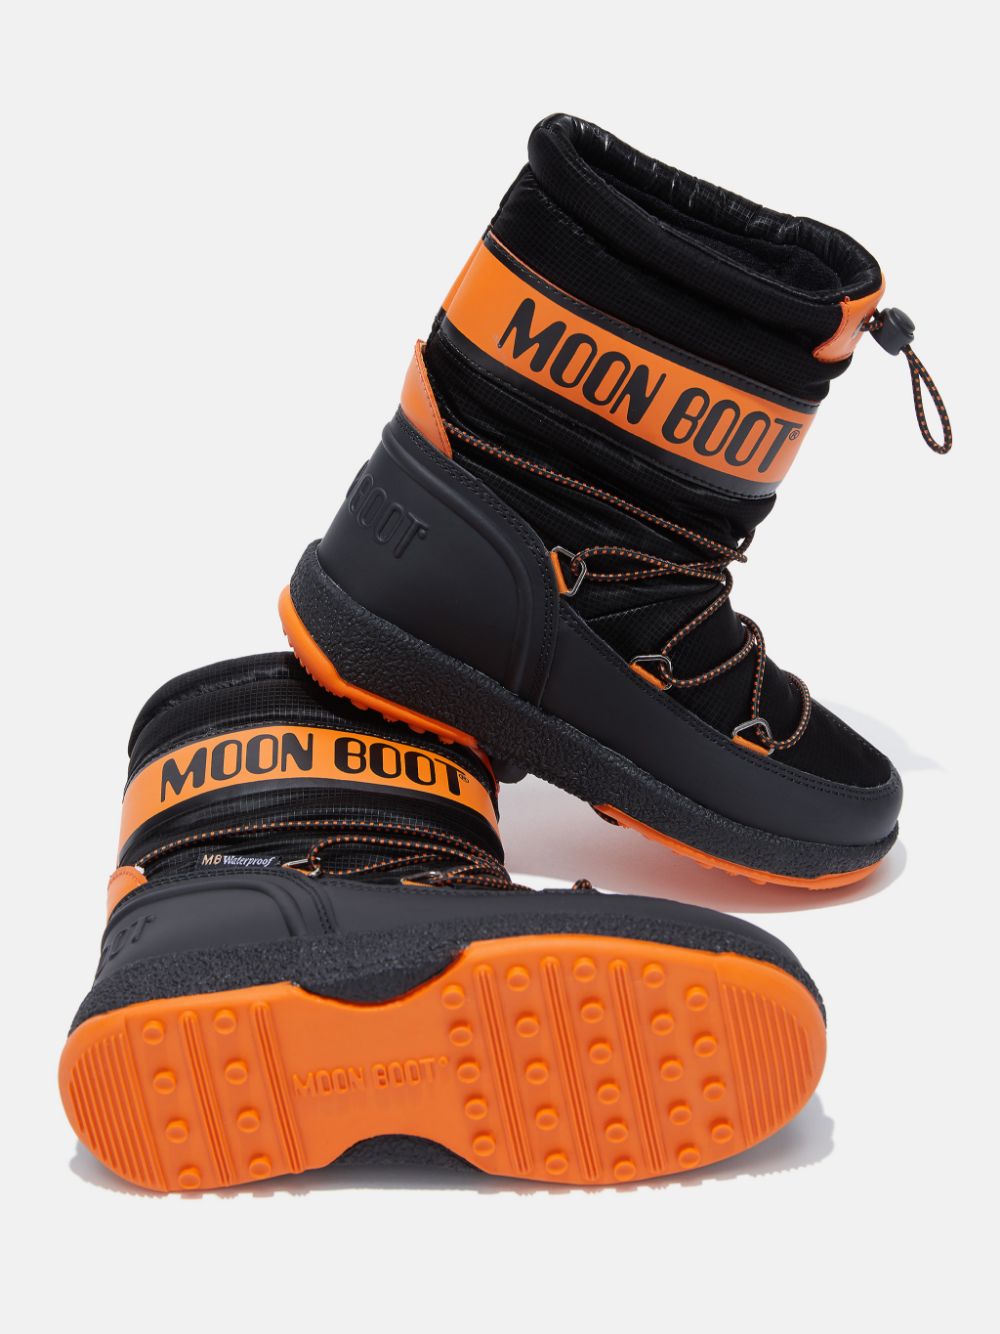 Moon boot arancione nero